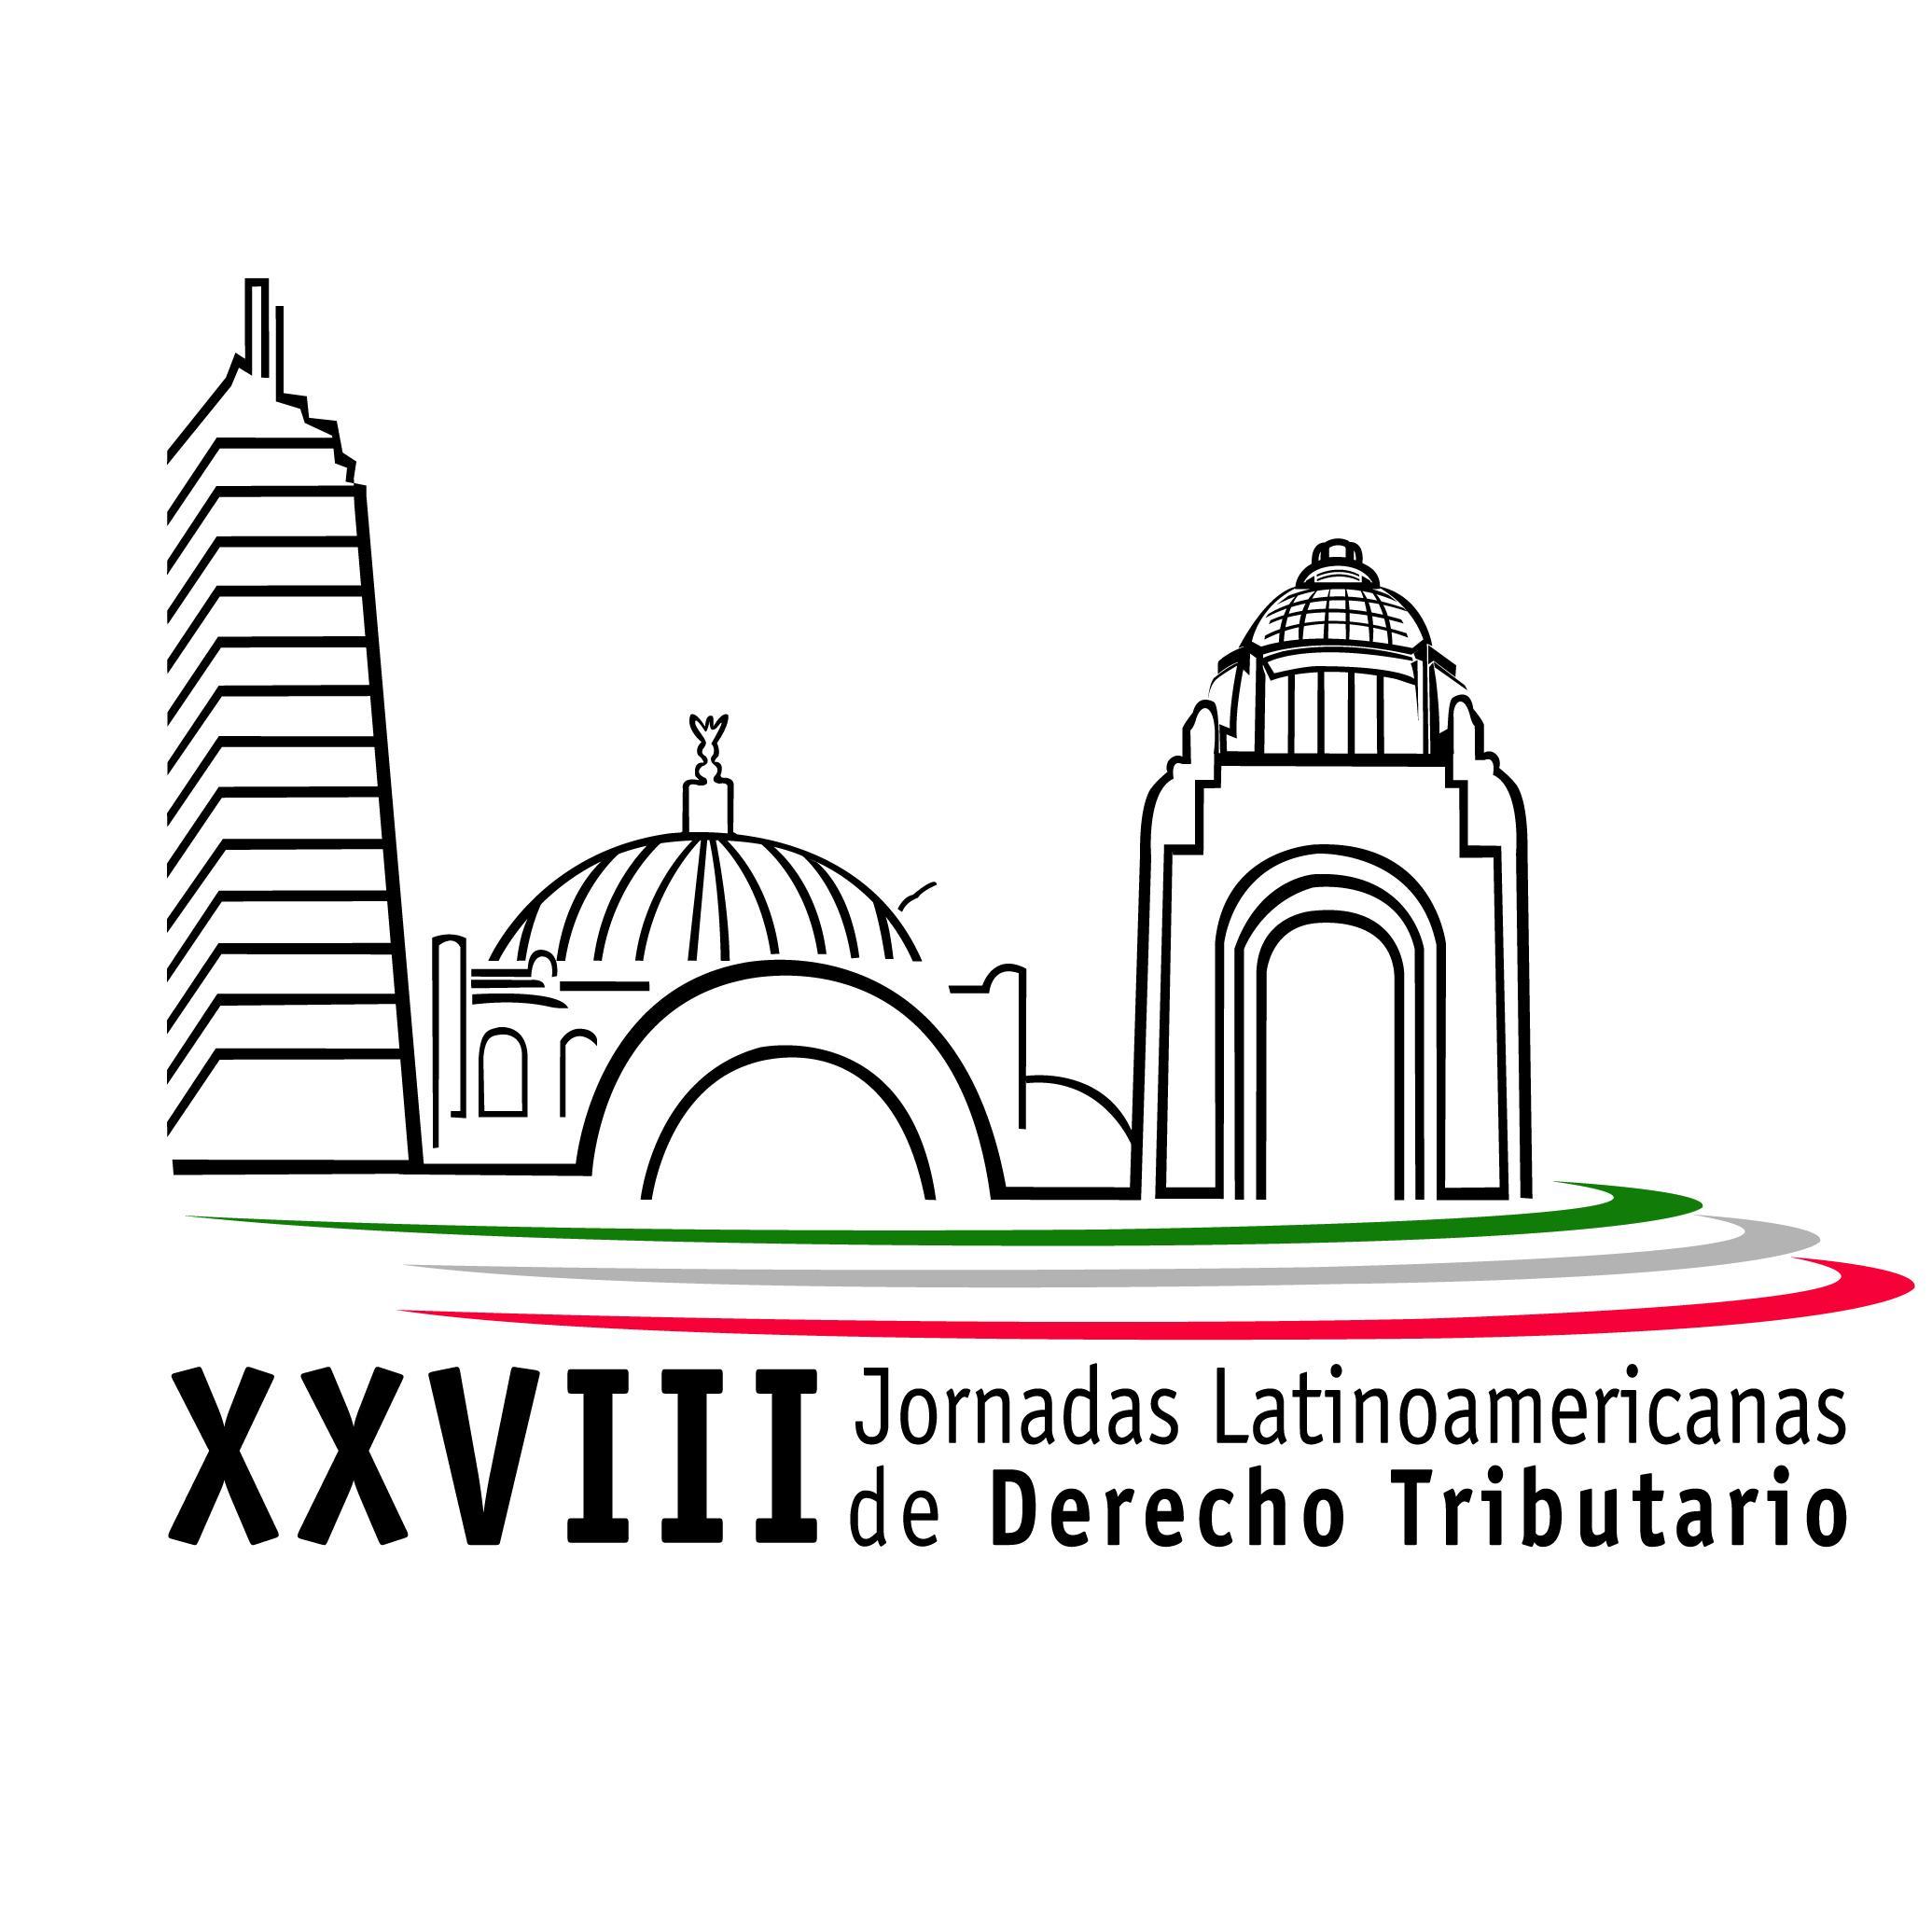 XXVIII Jornadas Latinoamericanas de Derecho Tributario.